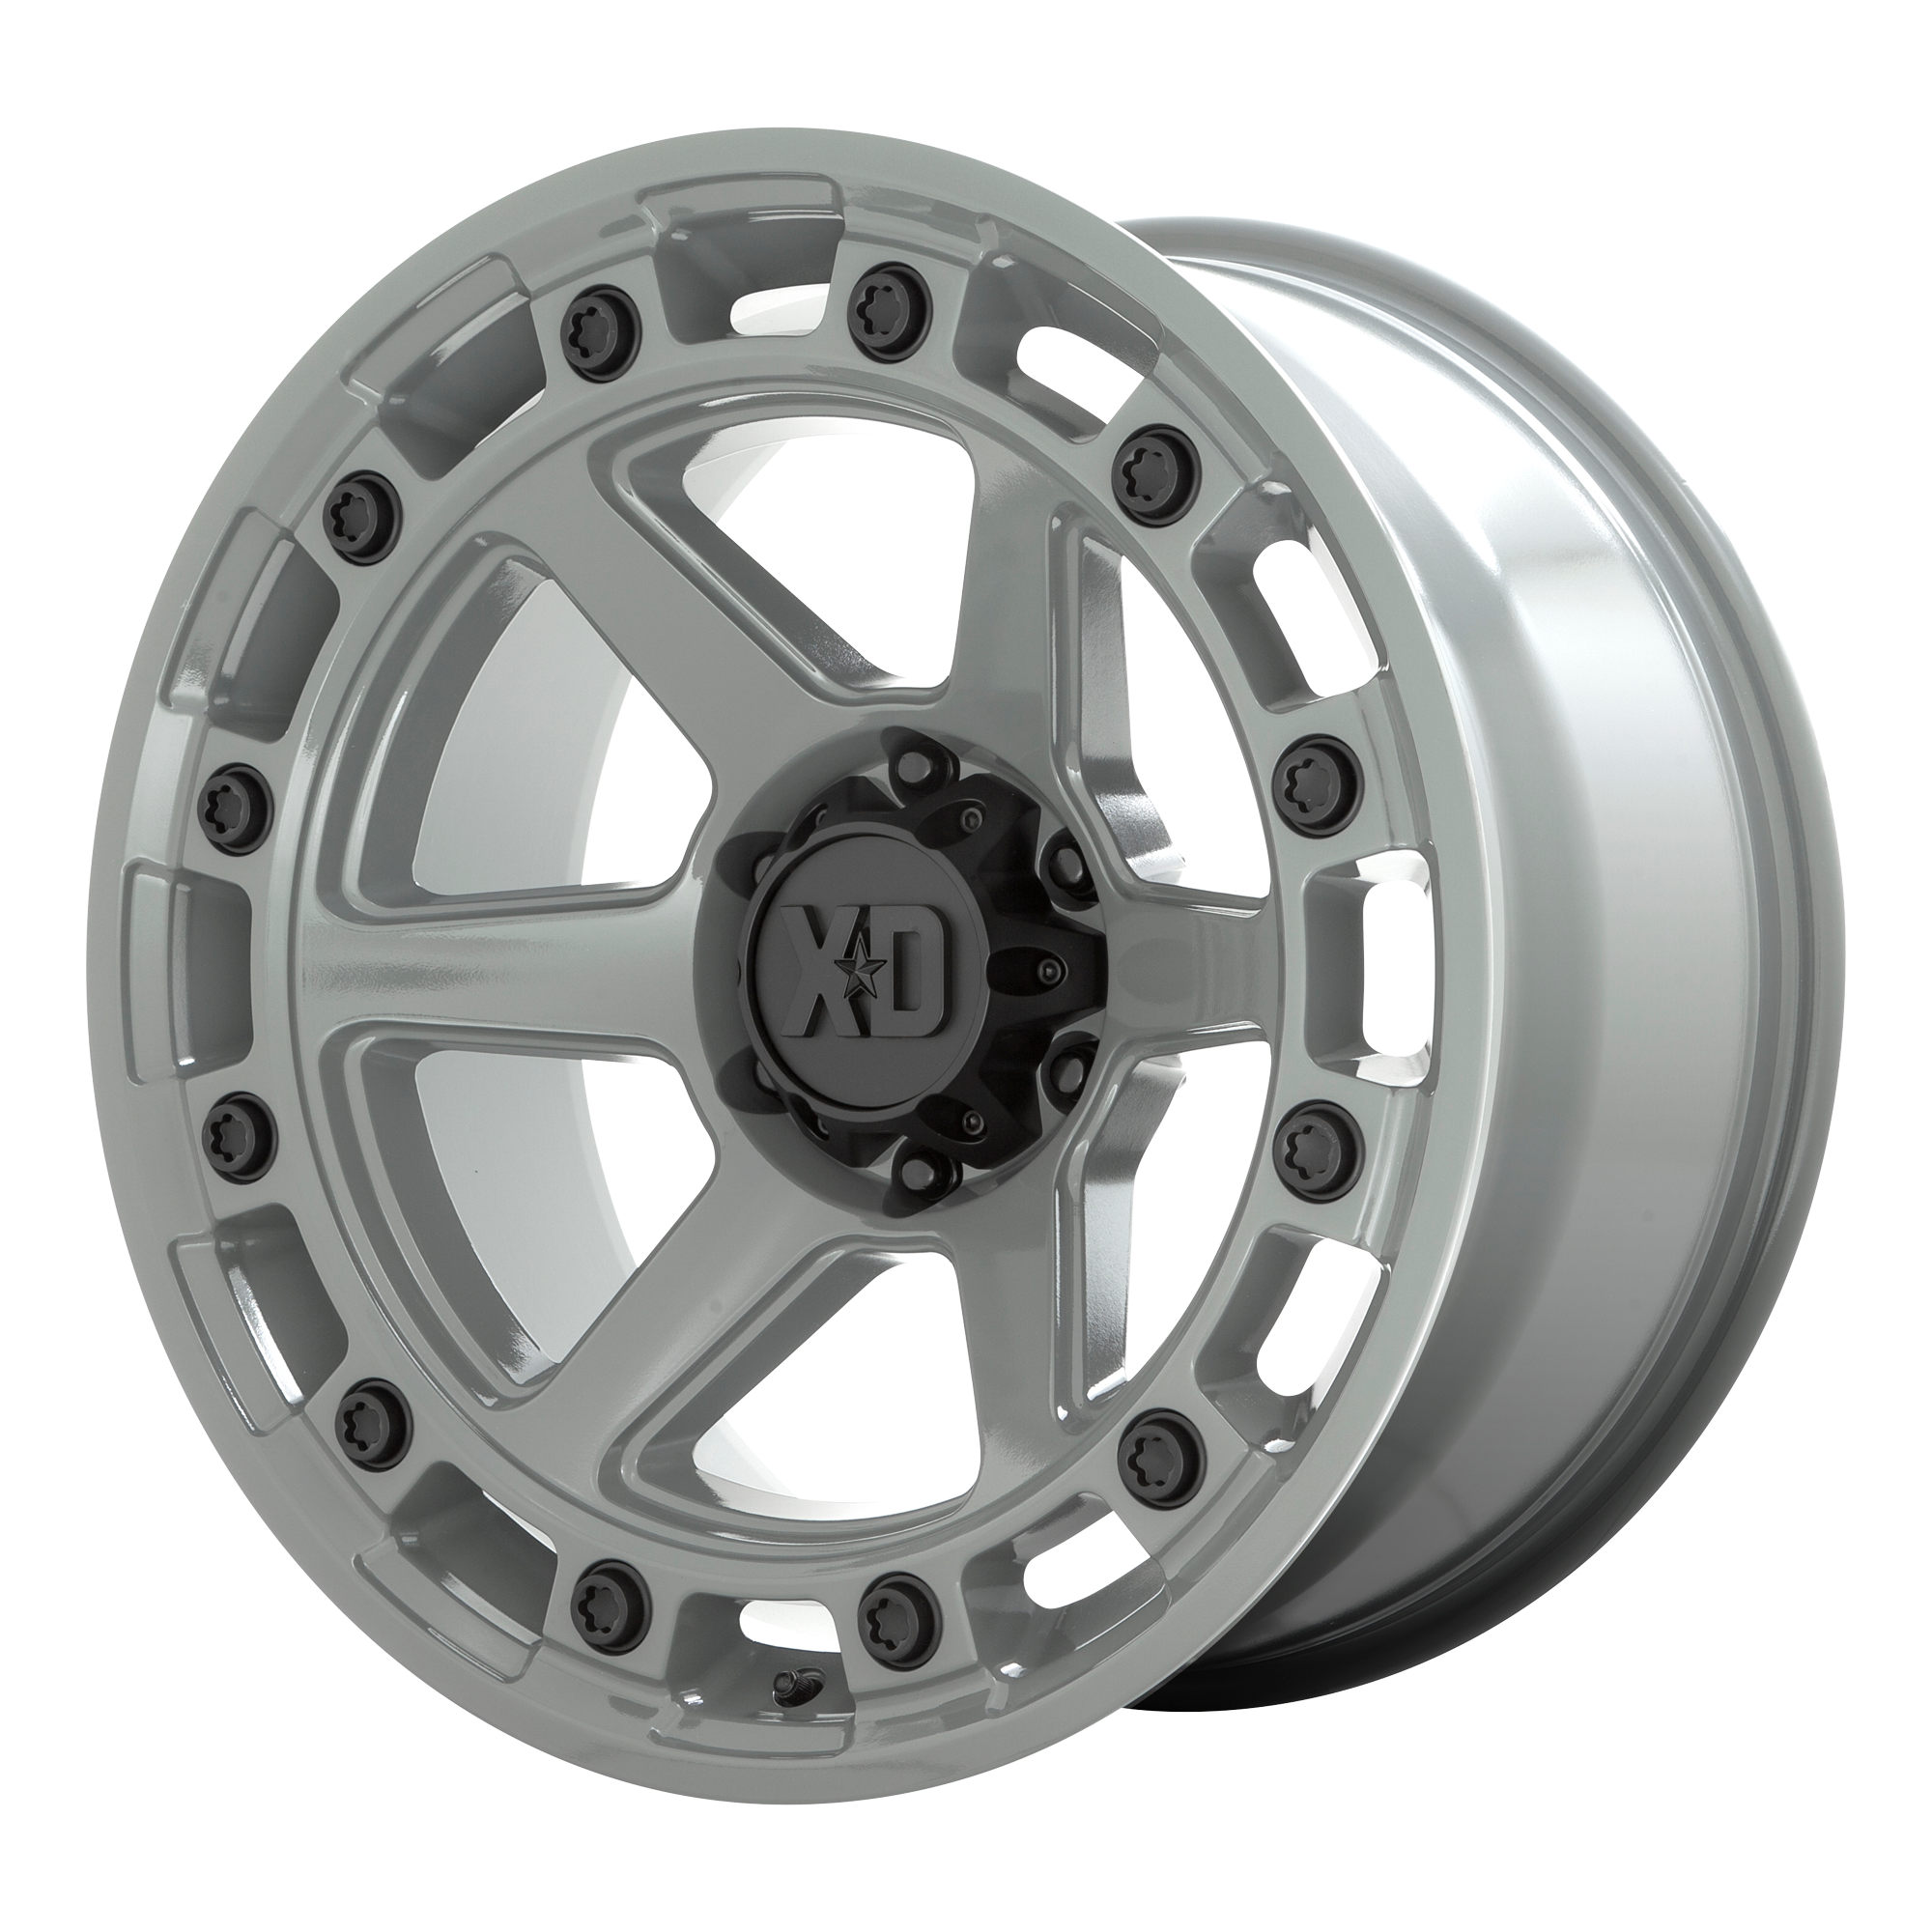 XD 20"x10" Non-Chrome Cement Custom Wheel ARSWCWXD86221050418N